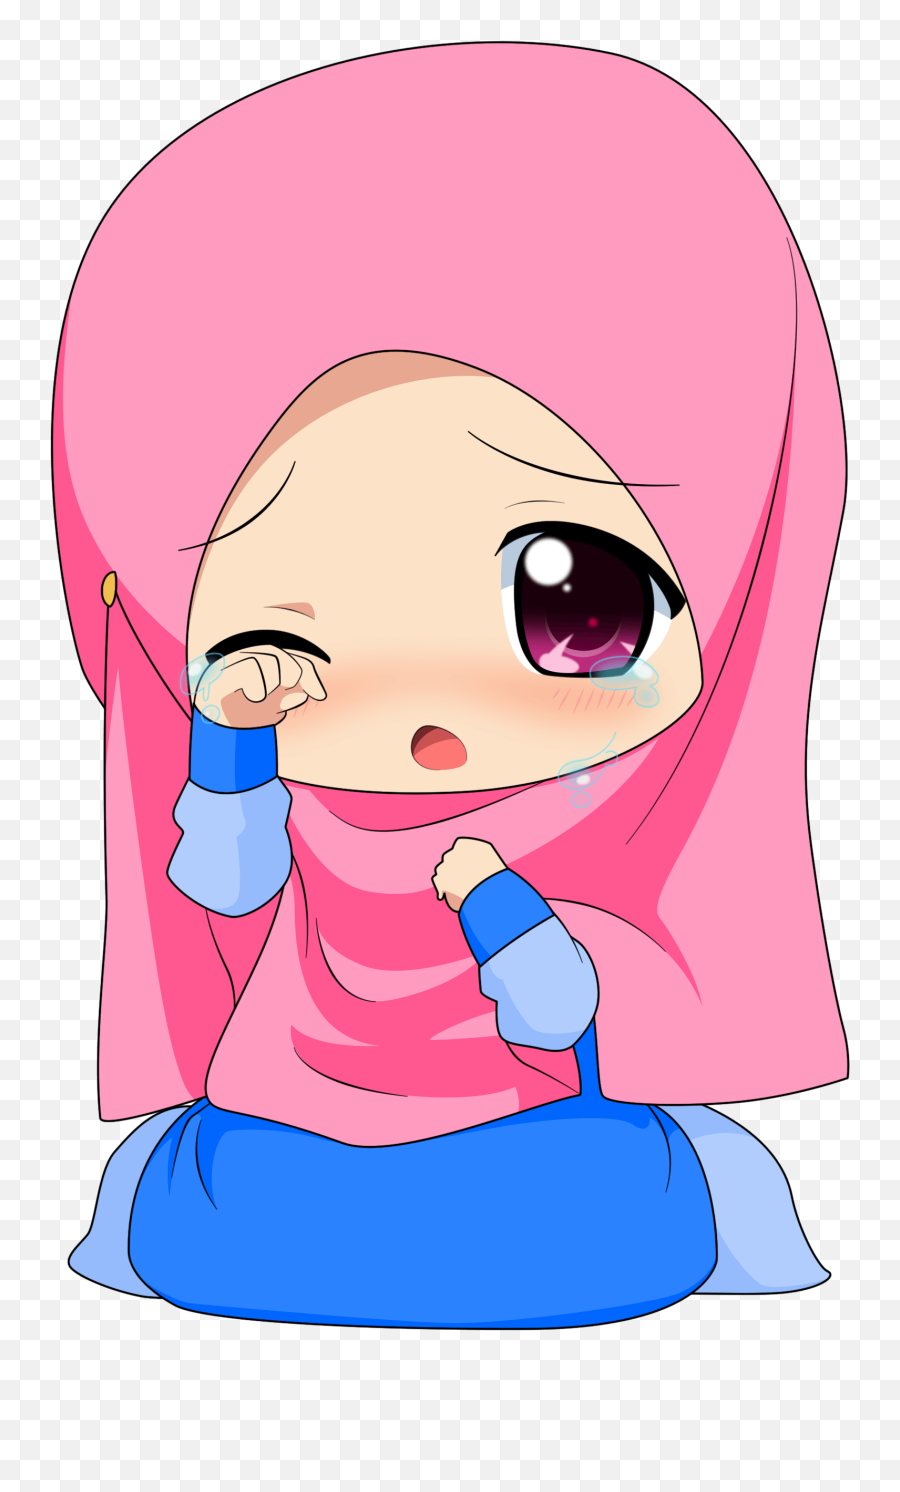 Inilah Gambar Kartun Sedih Dan Kecewa - Anime Chibi Muslimah Emoji,Emoticon Nangis Bergerak